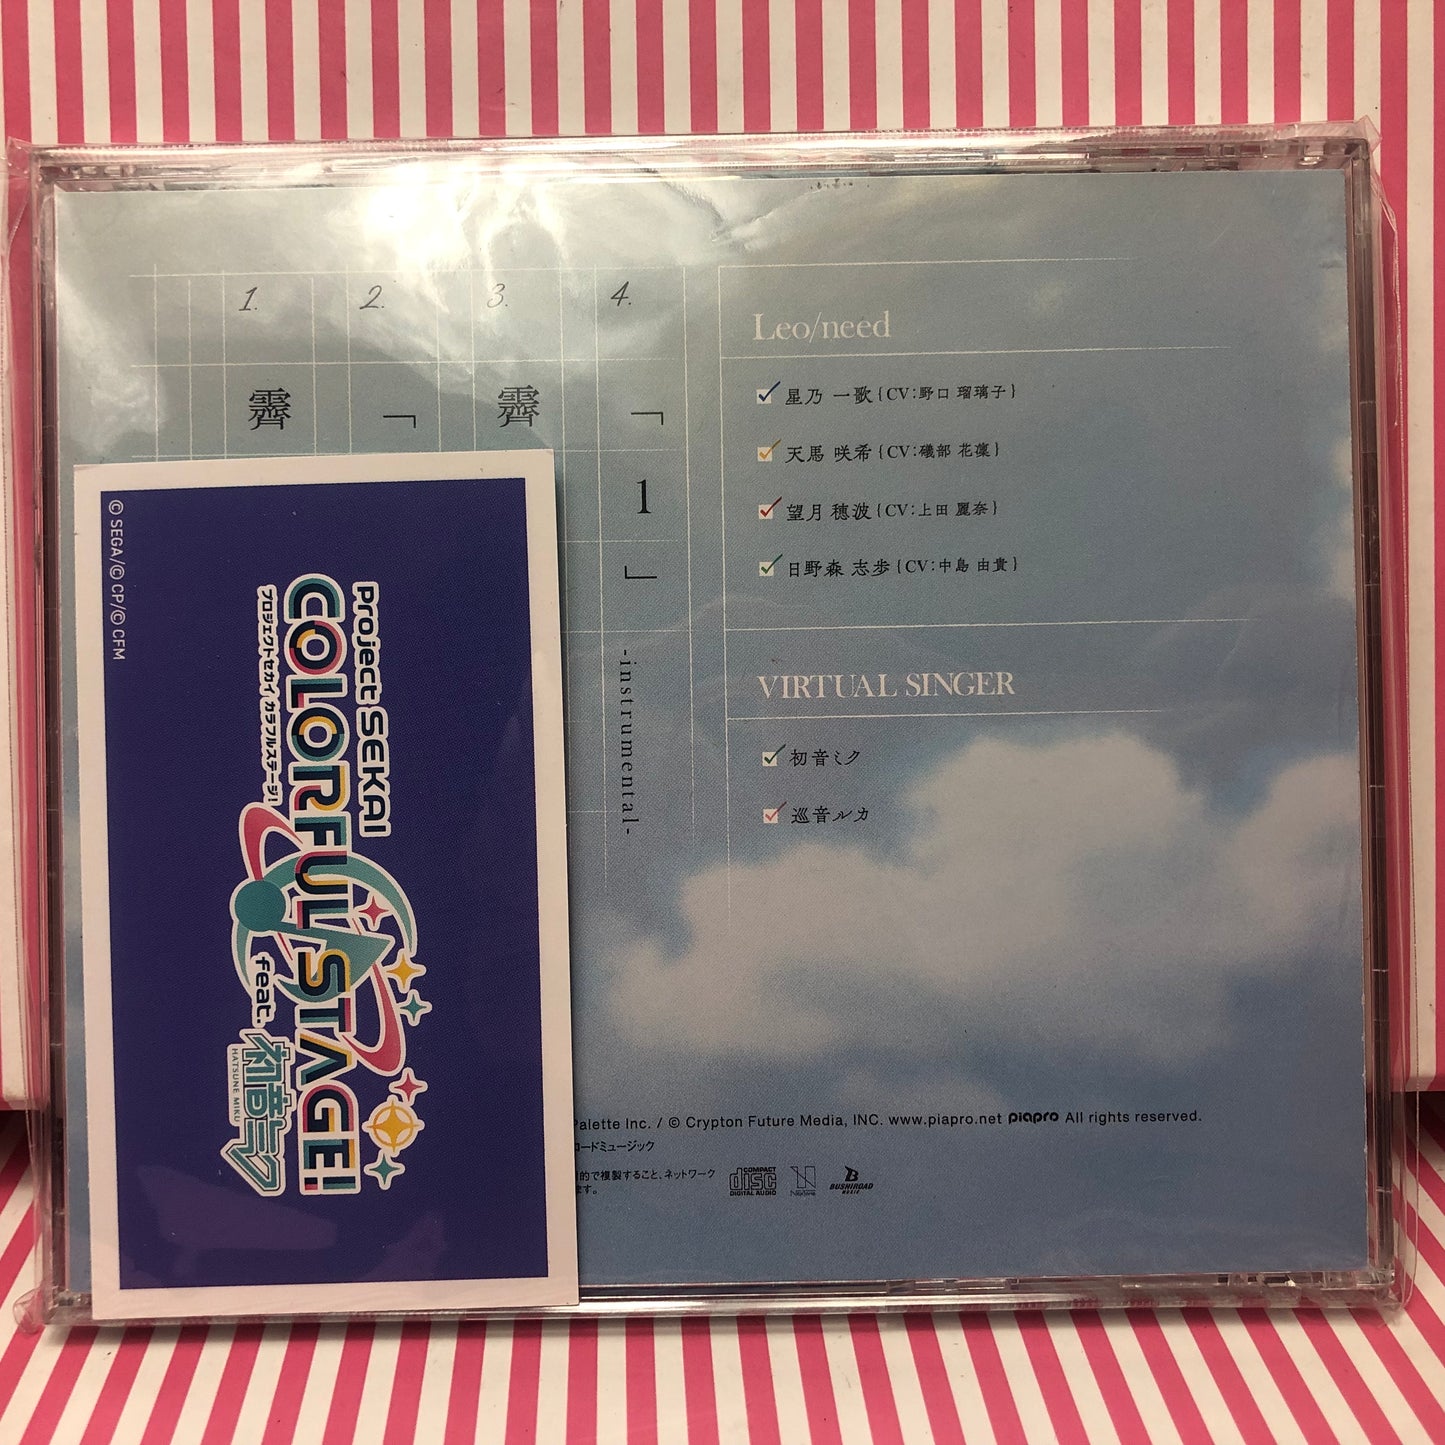 Project Sekai Colorful Stage! ft. Hatsune Miku - LeoNeed 2nd Single "1" CD